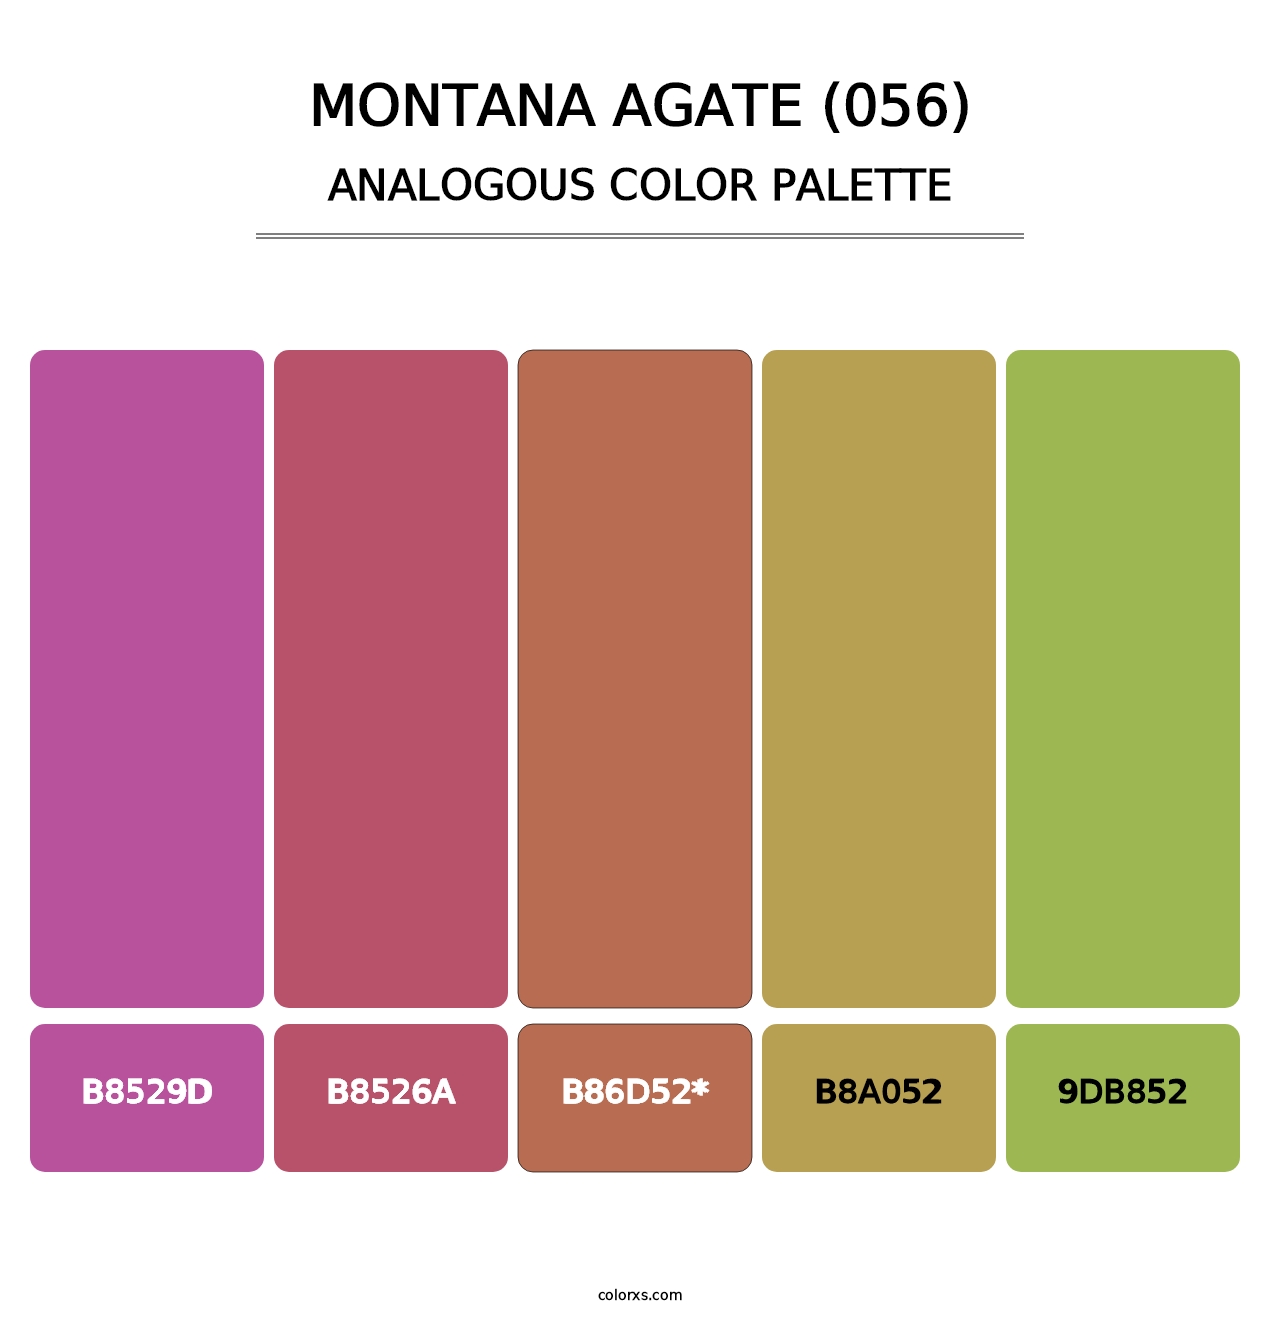 Montana Agate (056) - Analogous Color Palette